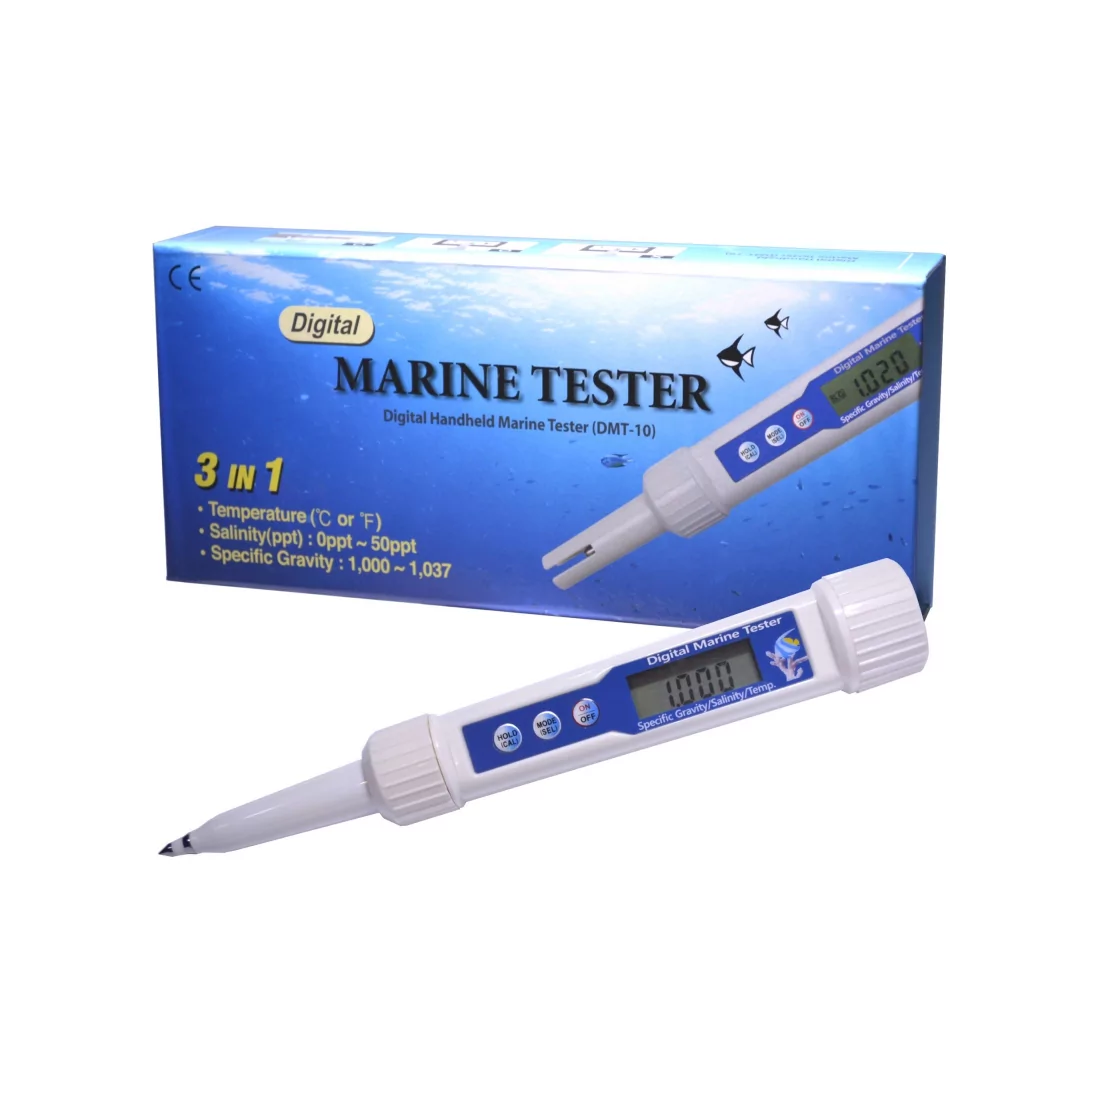 Marine tester (temp/salinity/gravity)